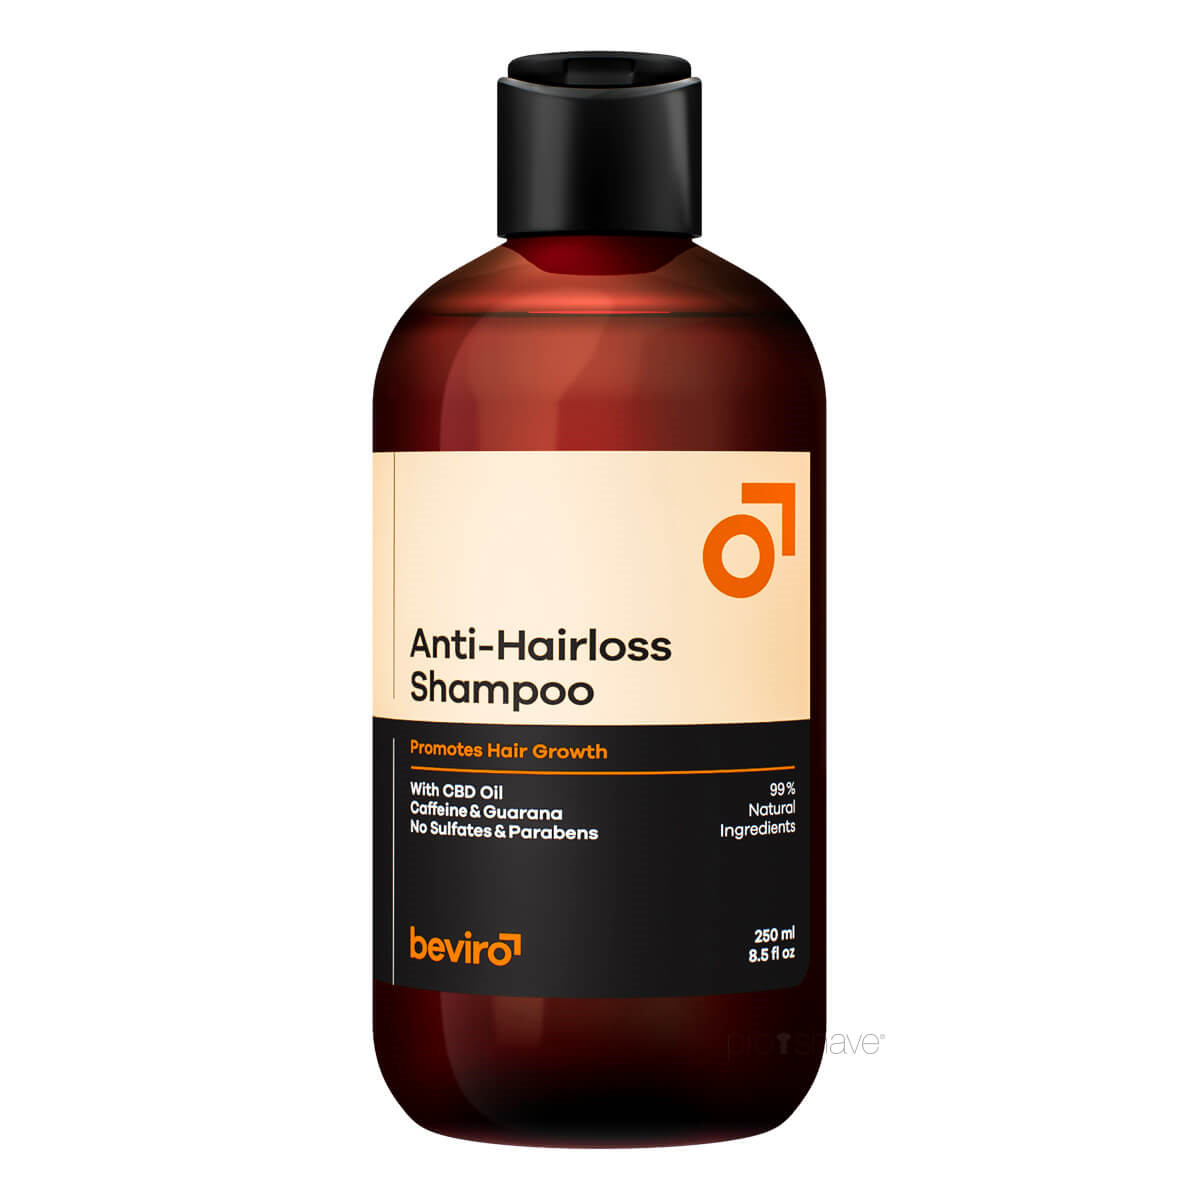 Billede af Beviro Anti-Hairloss Shampoo, 250 ml.